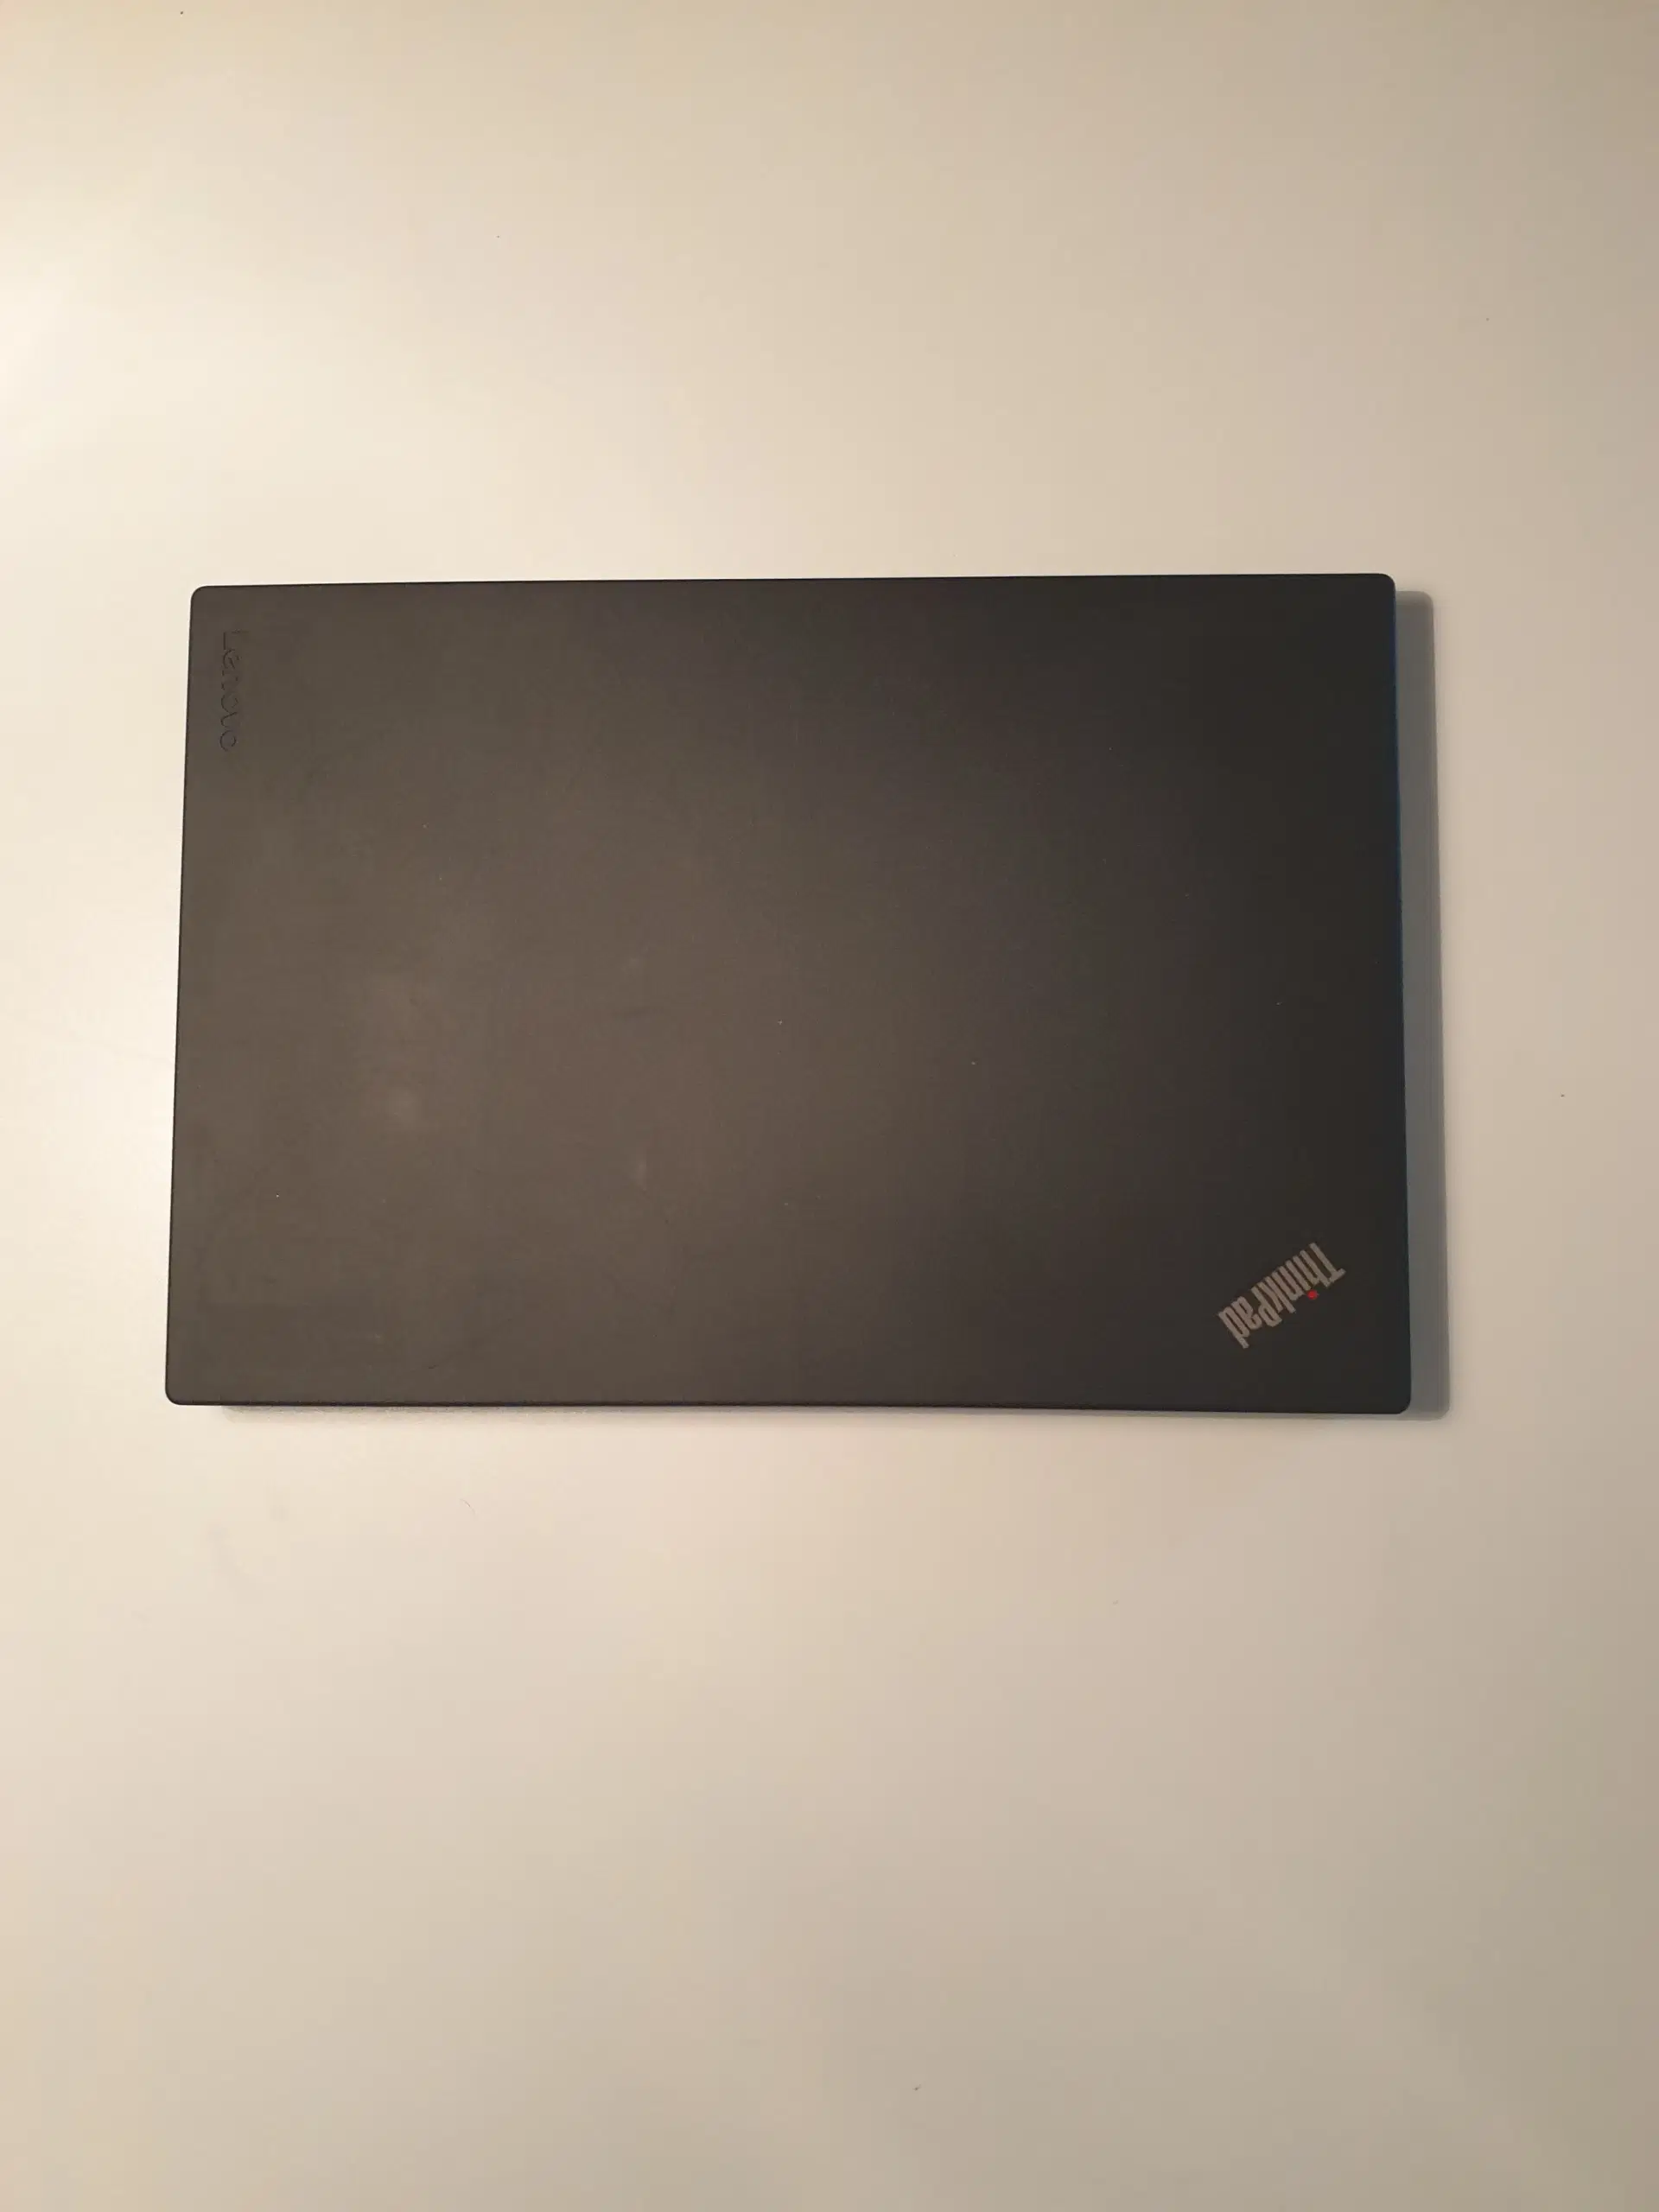 Brugt Lenovo ThinkPad X260 i5-6300U  m 2 x batteri